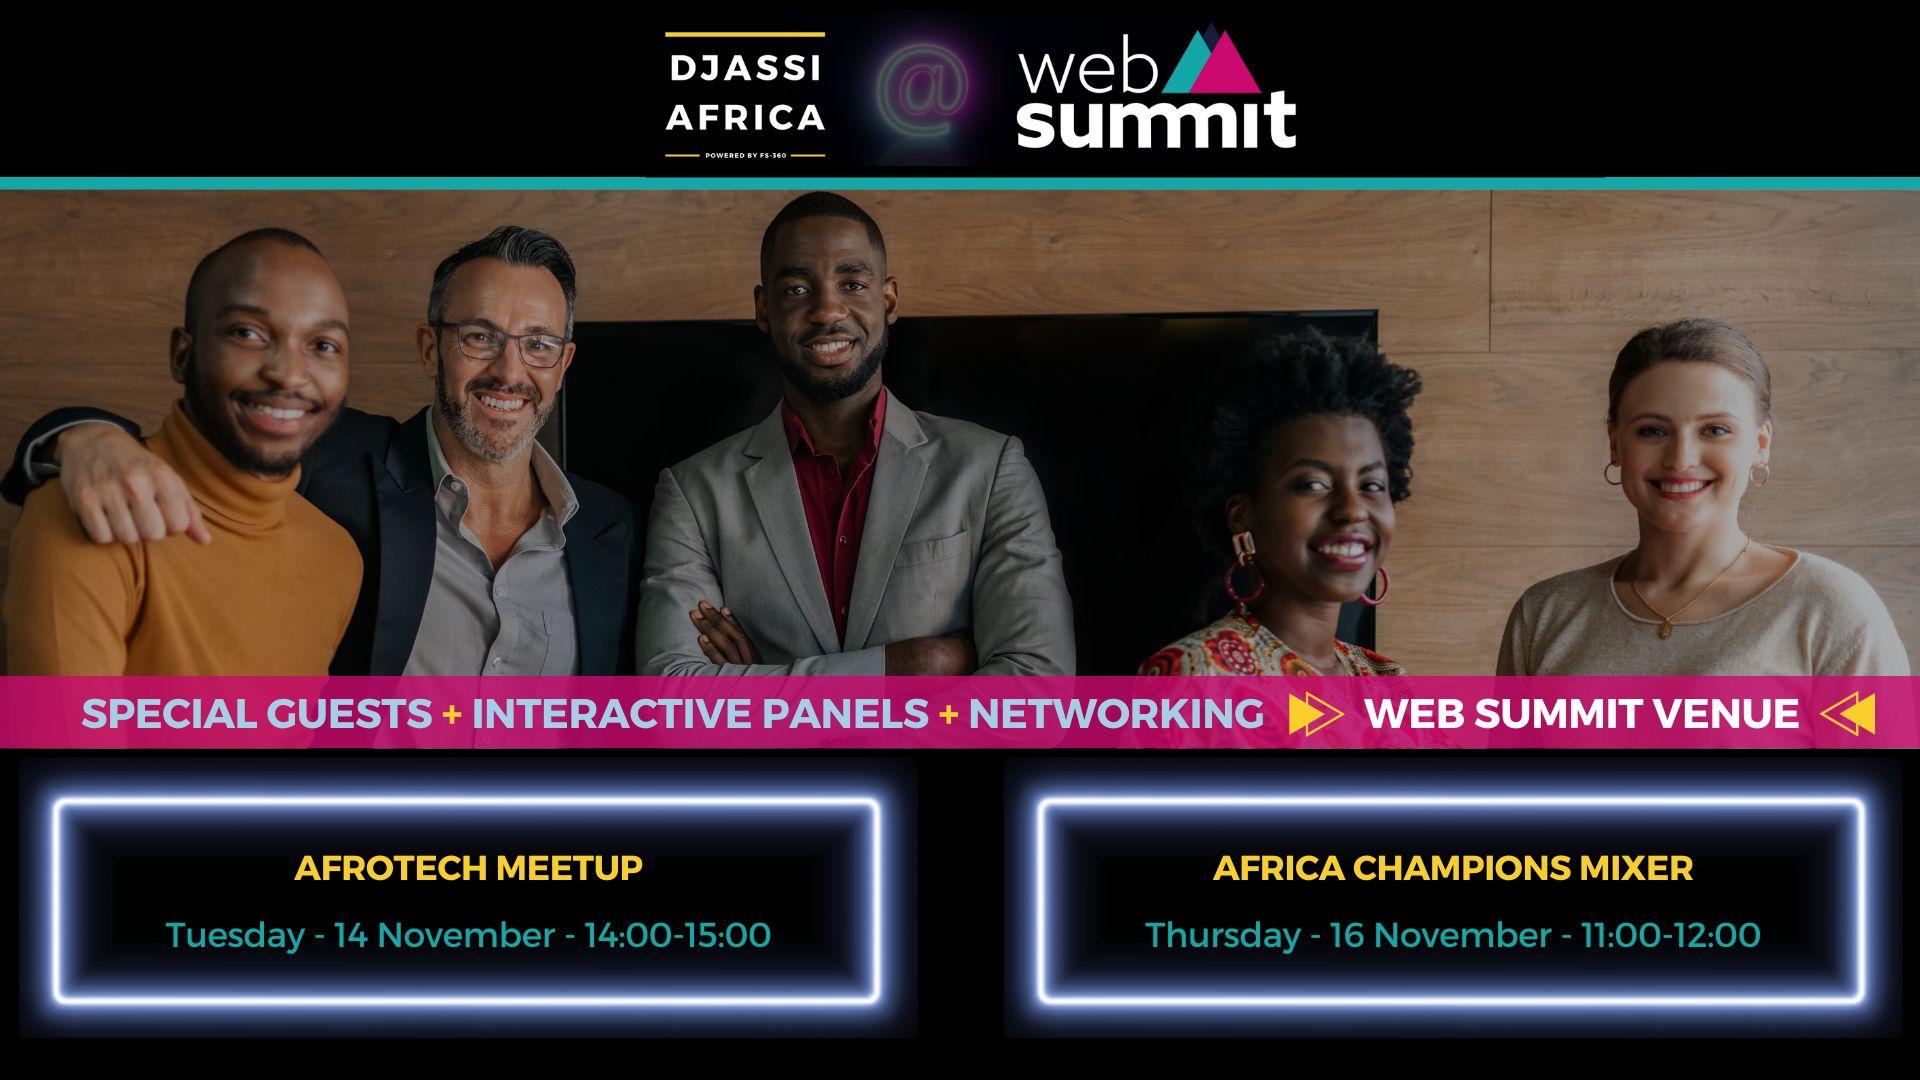 AfroTech Meetup + Africa Champions Mixer (@ WEB SUMMIT VENUE)